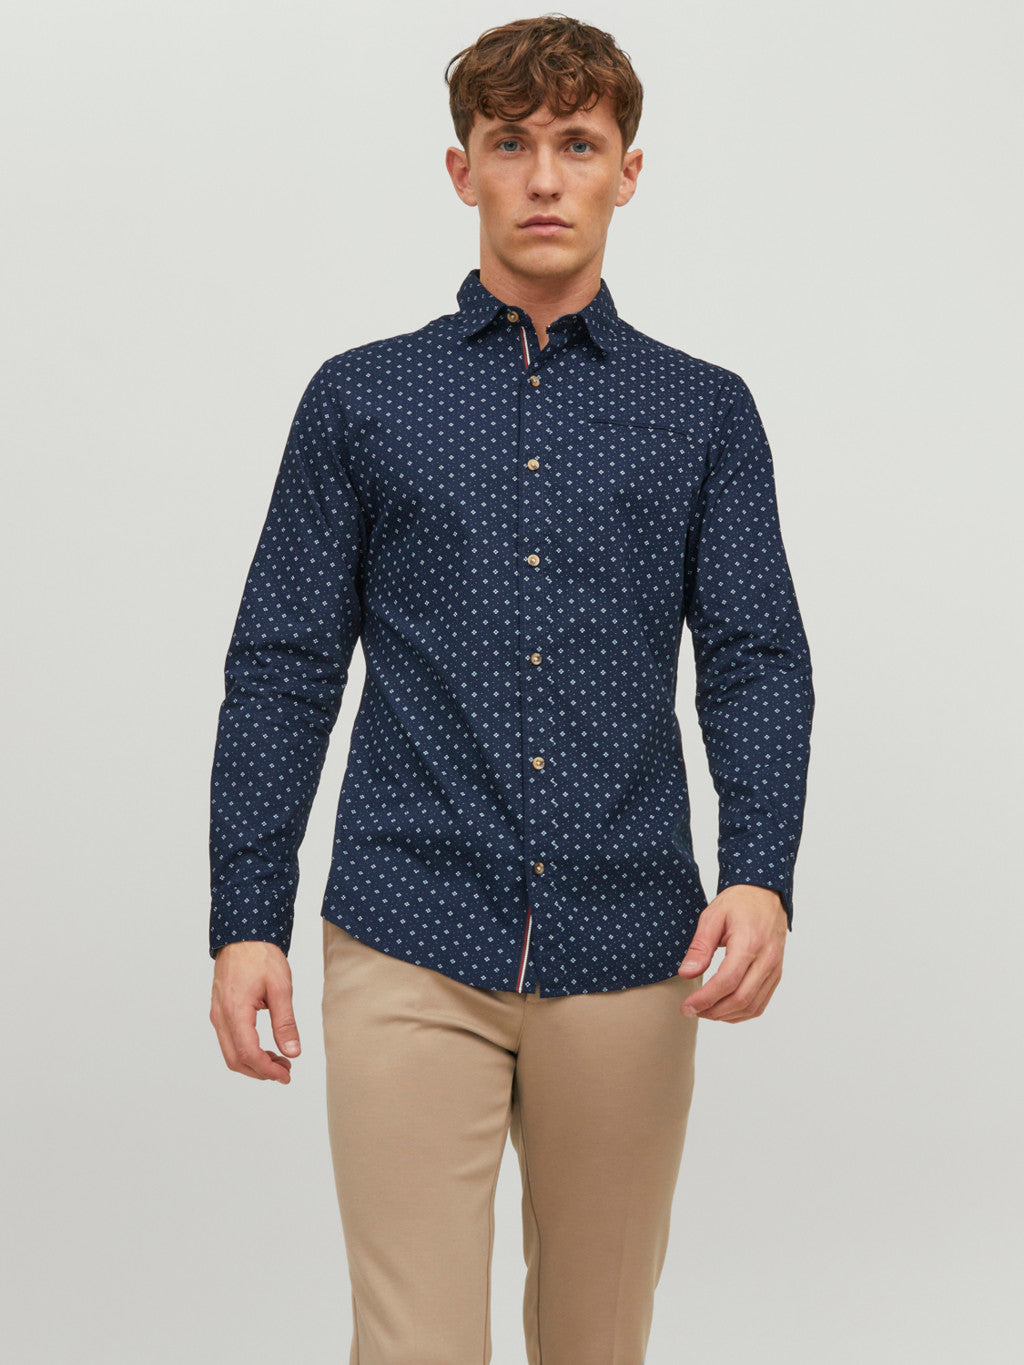 Jack&Jones men's patterned navy shirt